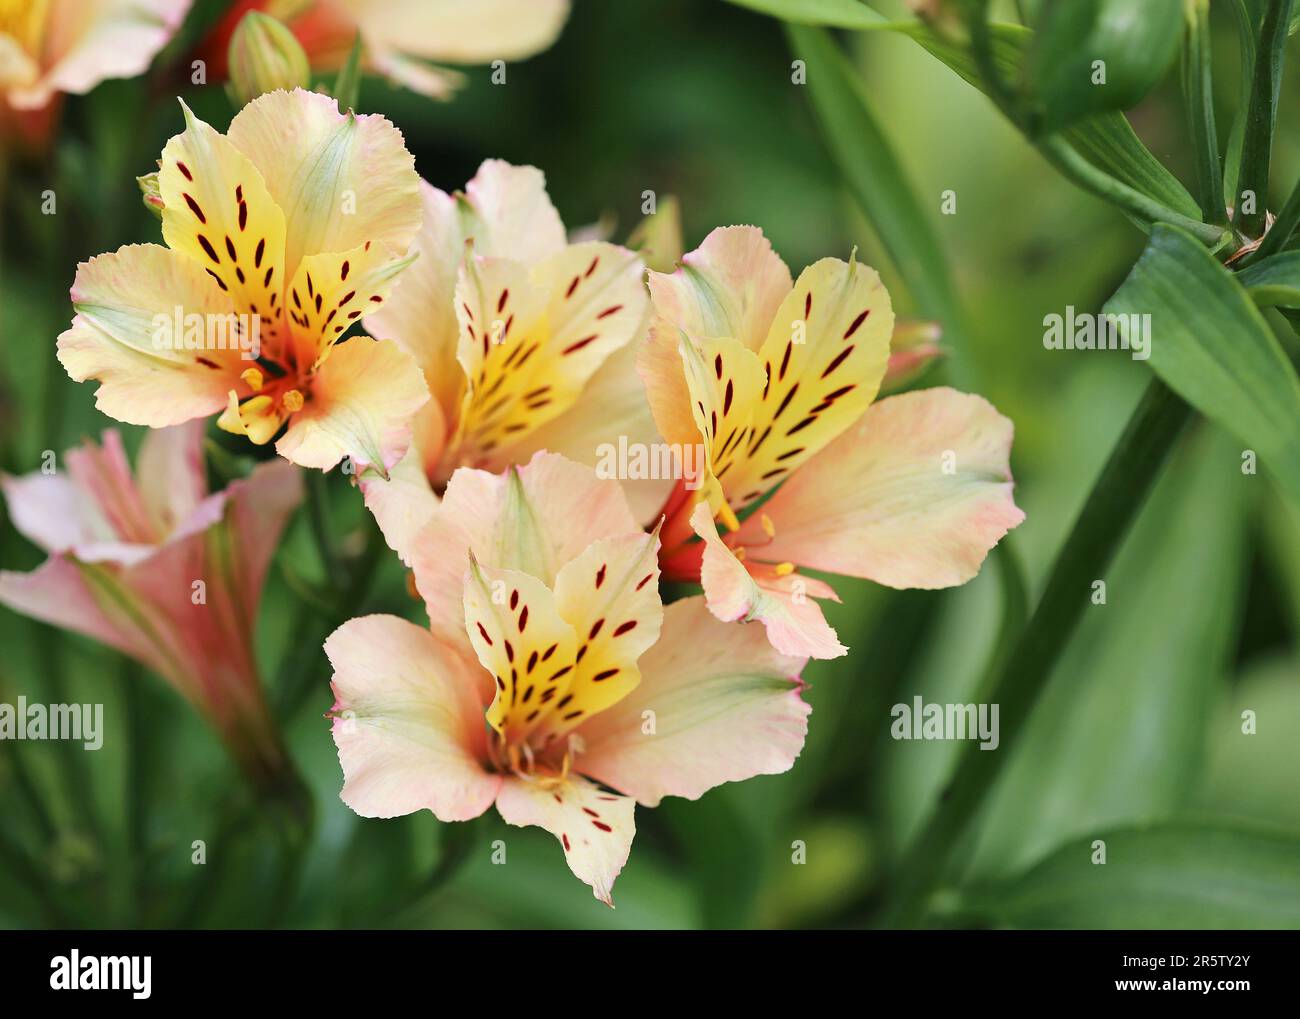 Alstromeria flower close up Stock Photo